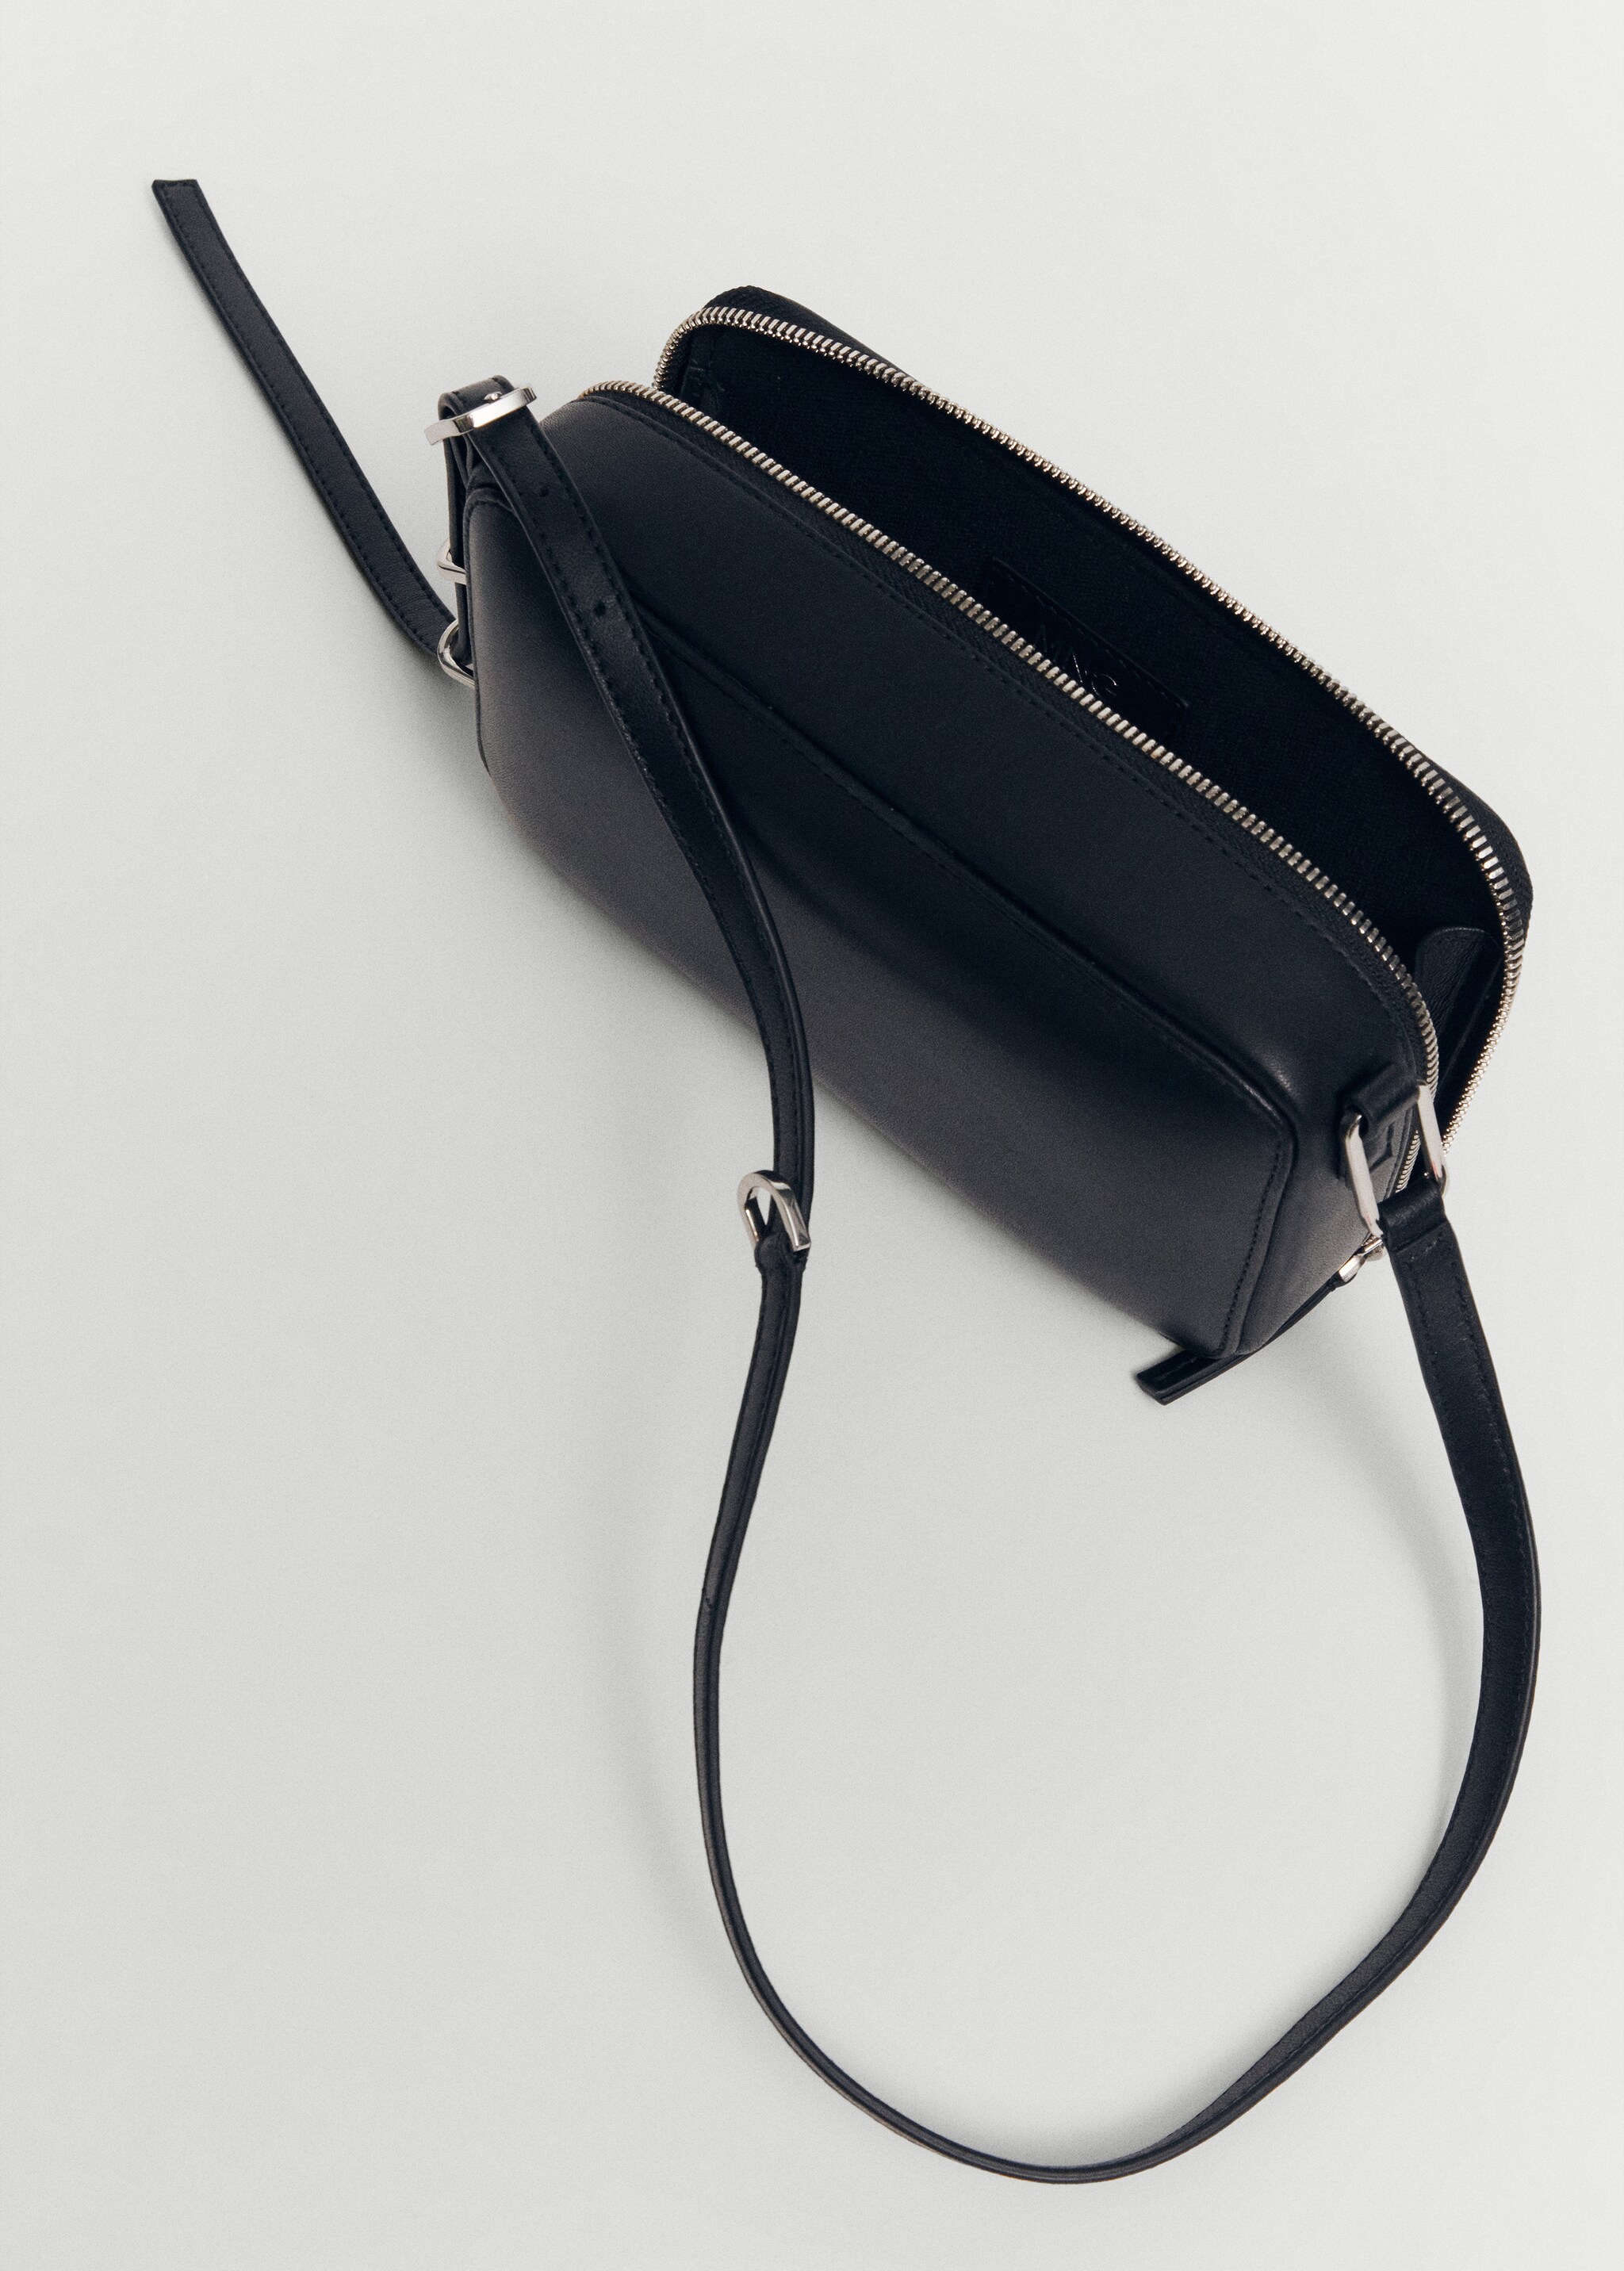 Rectangular leather handbag - Details of the article 2